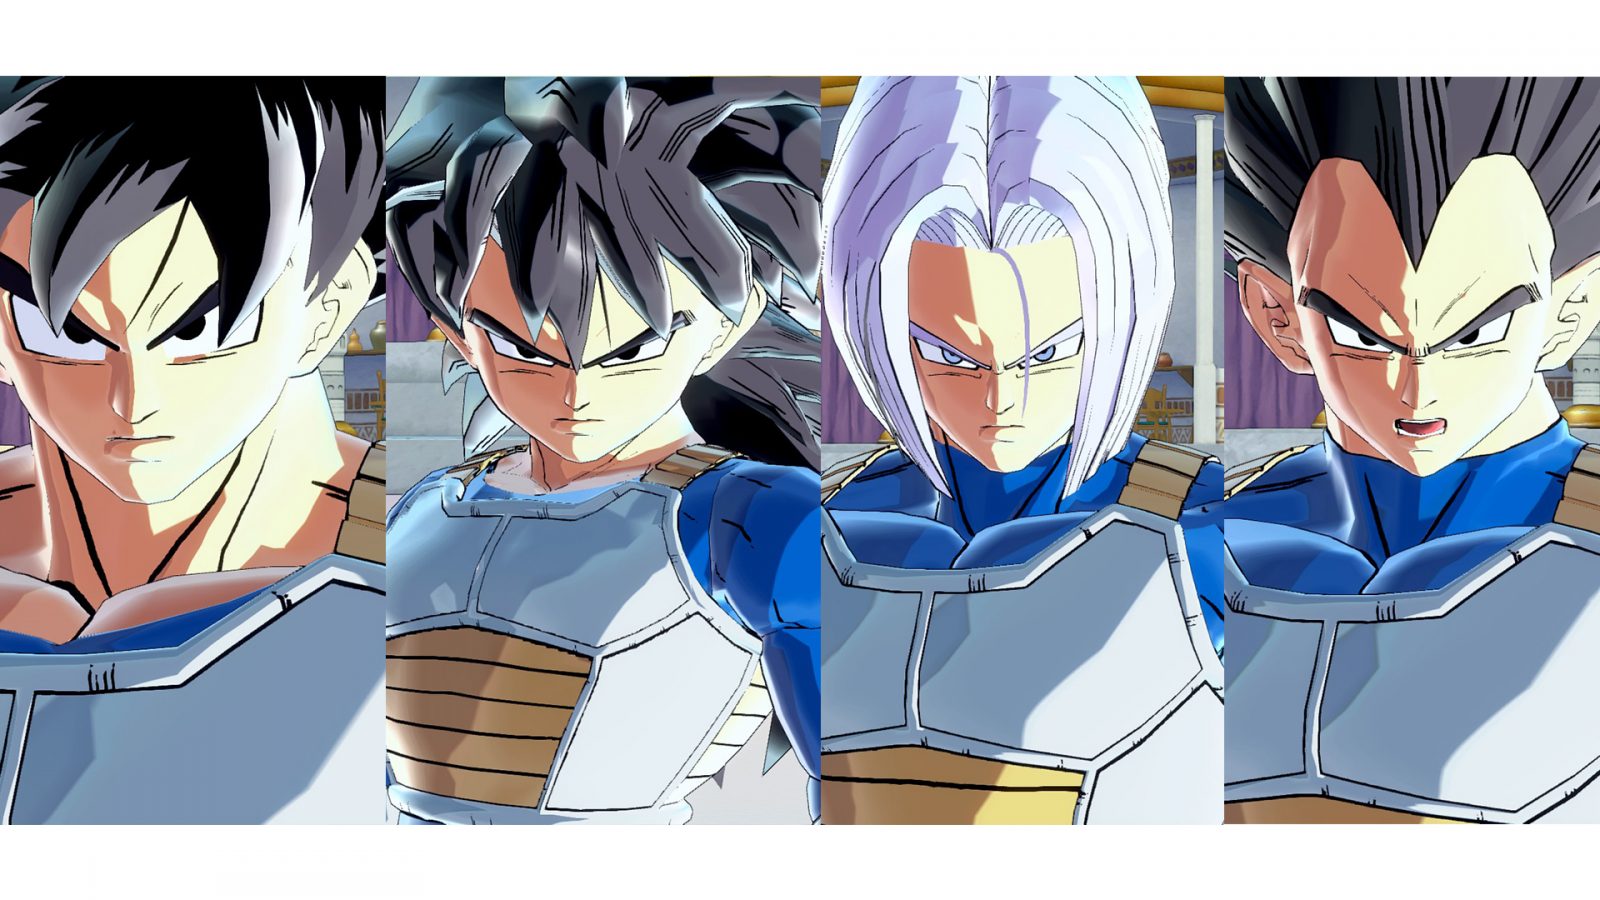 Vegeta/Goku/Gohan/Trunks Battle Suit FighterZ Shading – Xenoverse Mods